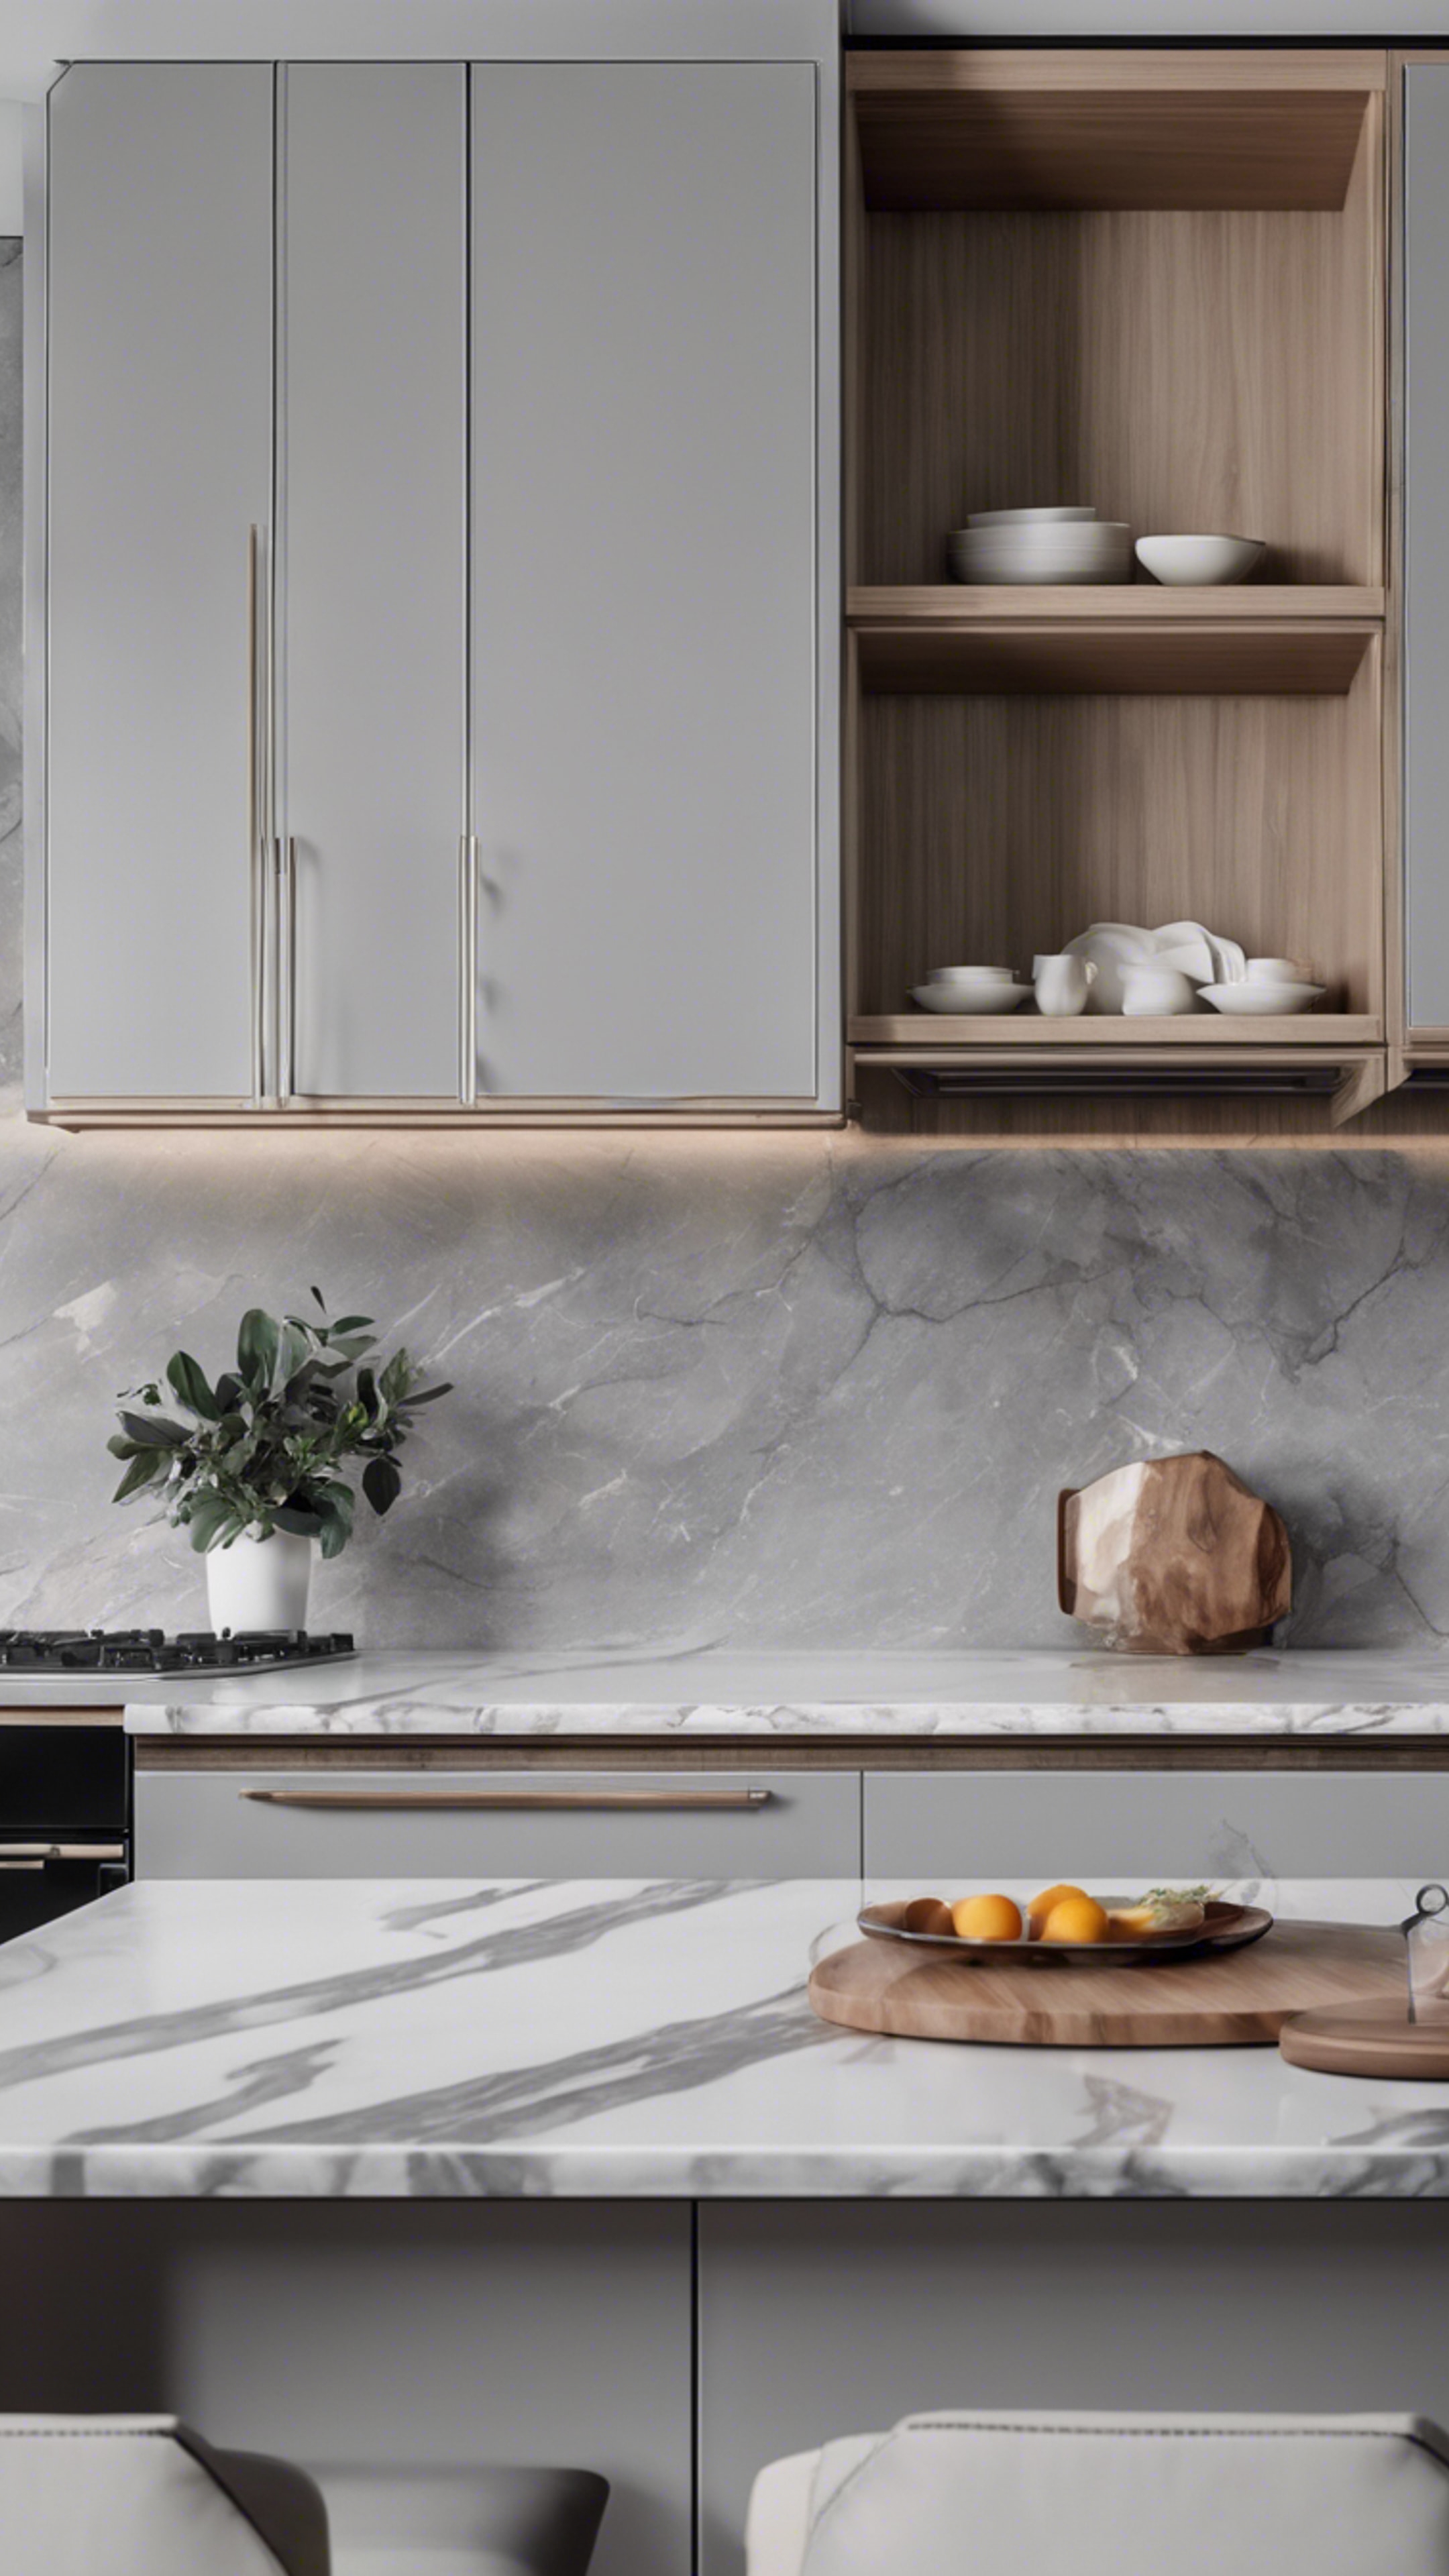 A sleek, modern kitchen design featuring light gray cabinetry with an elegant marble island. duvar kağıdı[6f0121d4a4f844f596f3]